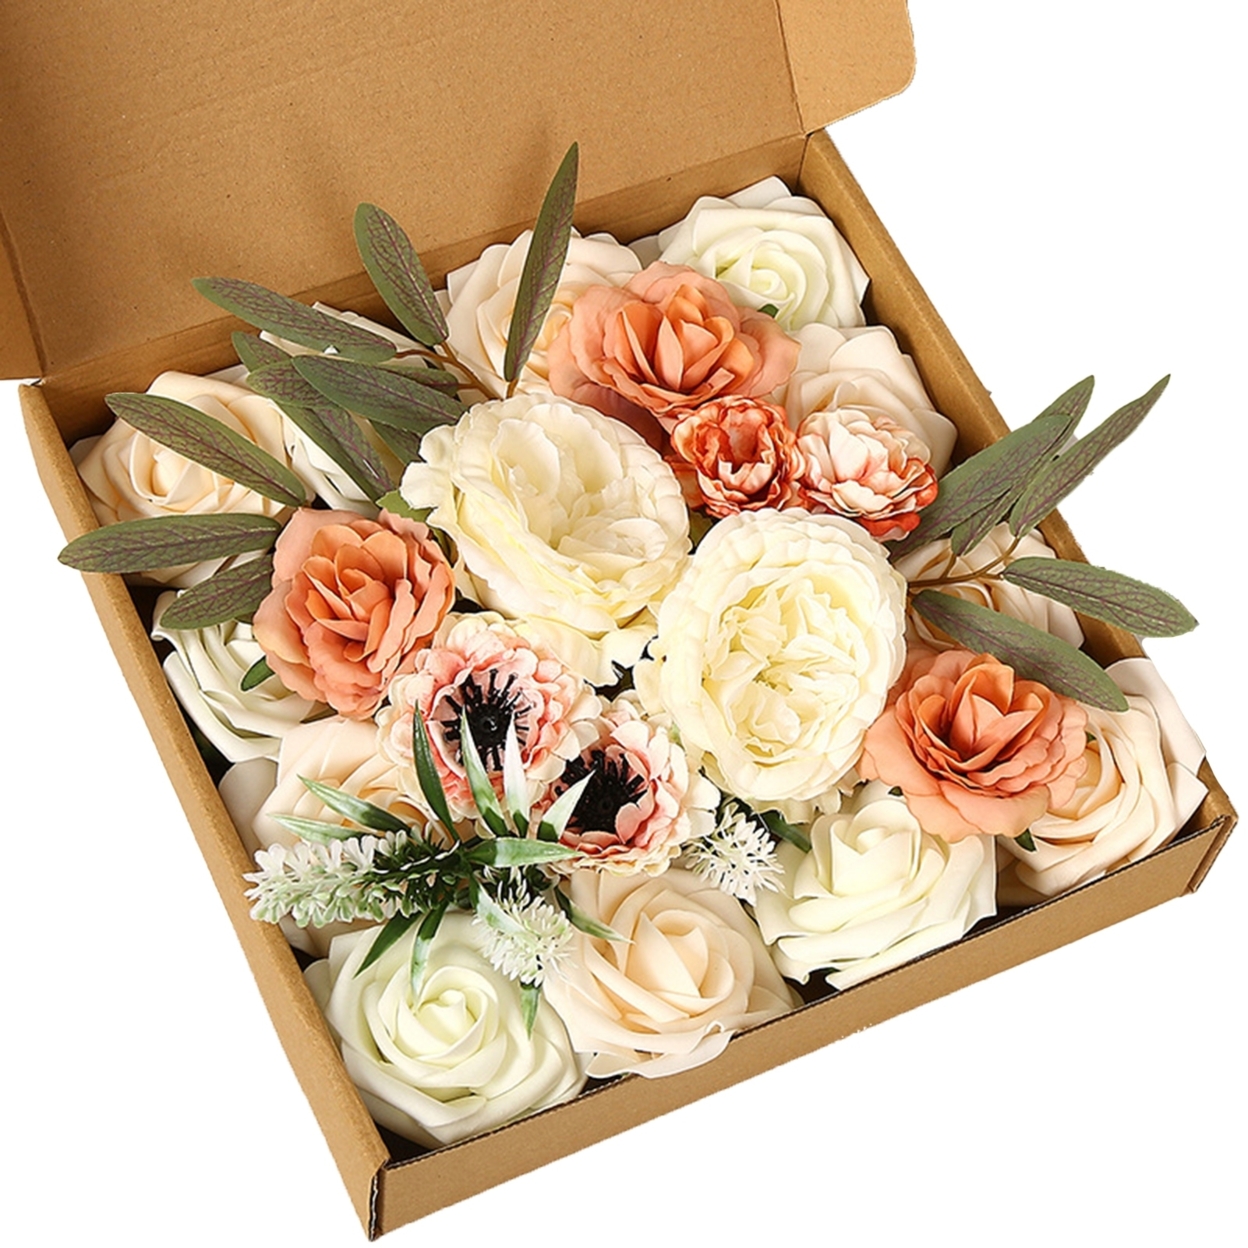 1 Box Beautiful Realistic Artificial Flower Faux Silk Flower Vivid Fine Texture Simulation Rose Wedding Accessories - orange